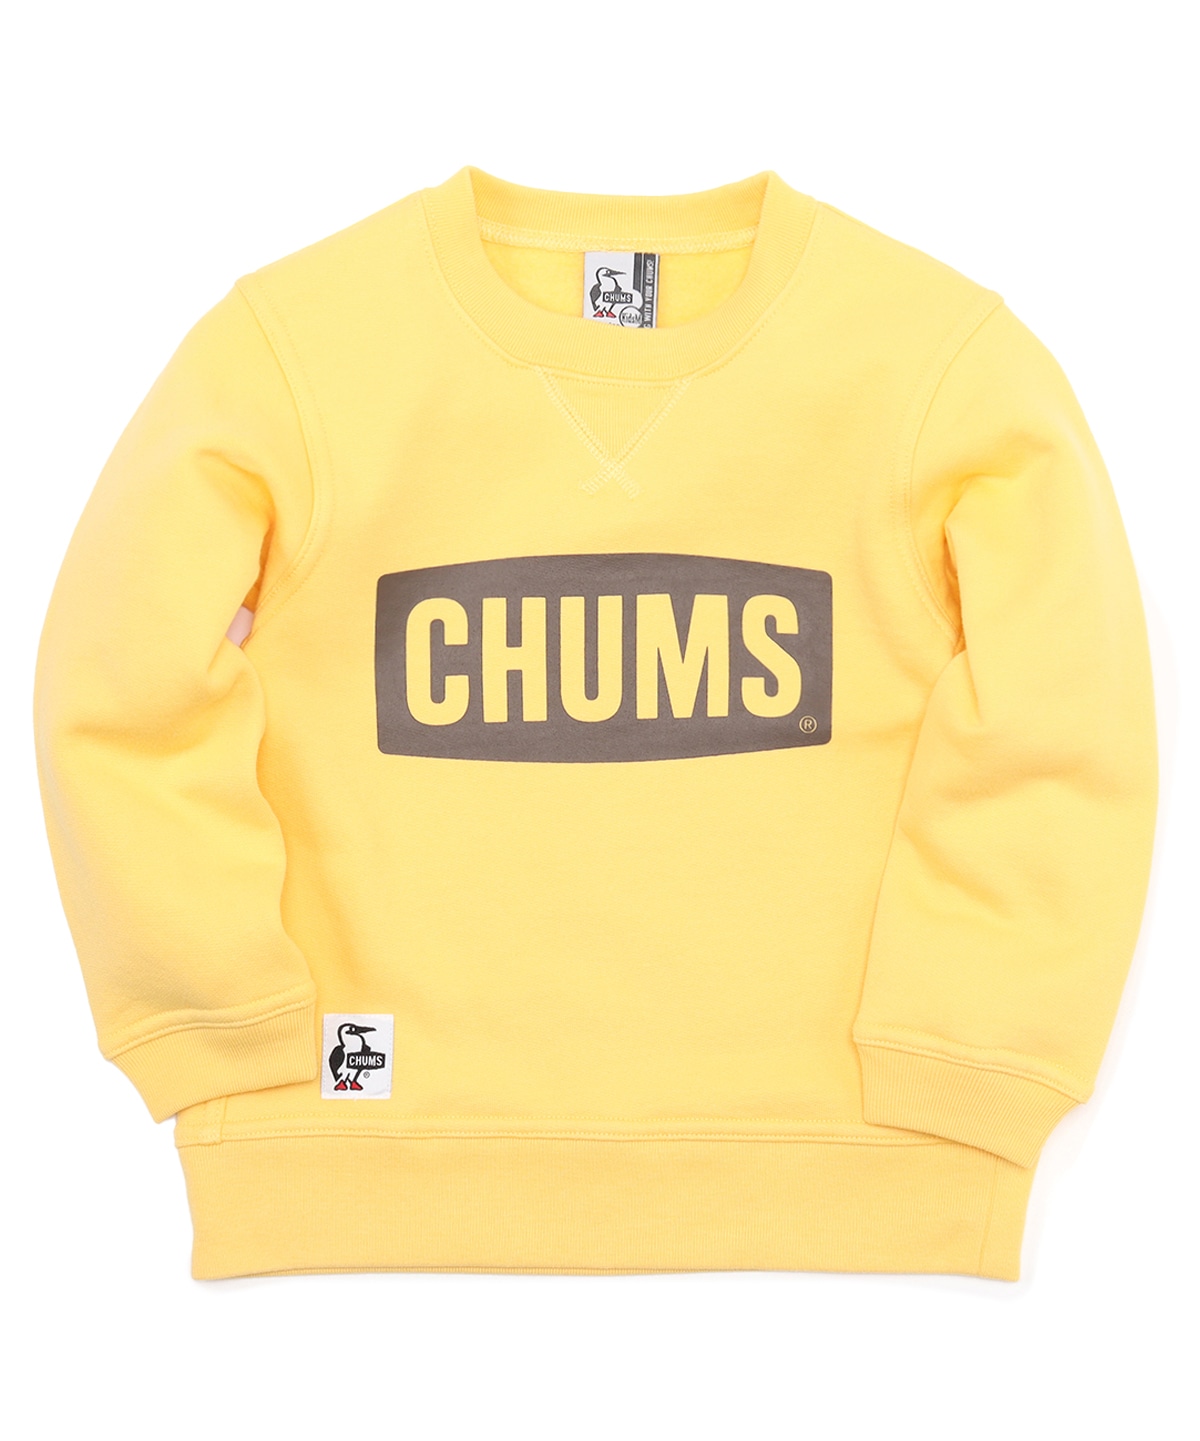 Kid's CHUMS Logo Crew Top(キッズチャムスロゴクルートップ(キッズ｜スウェット))